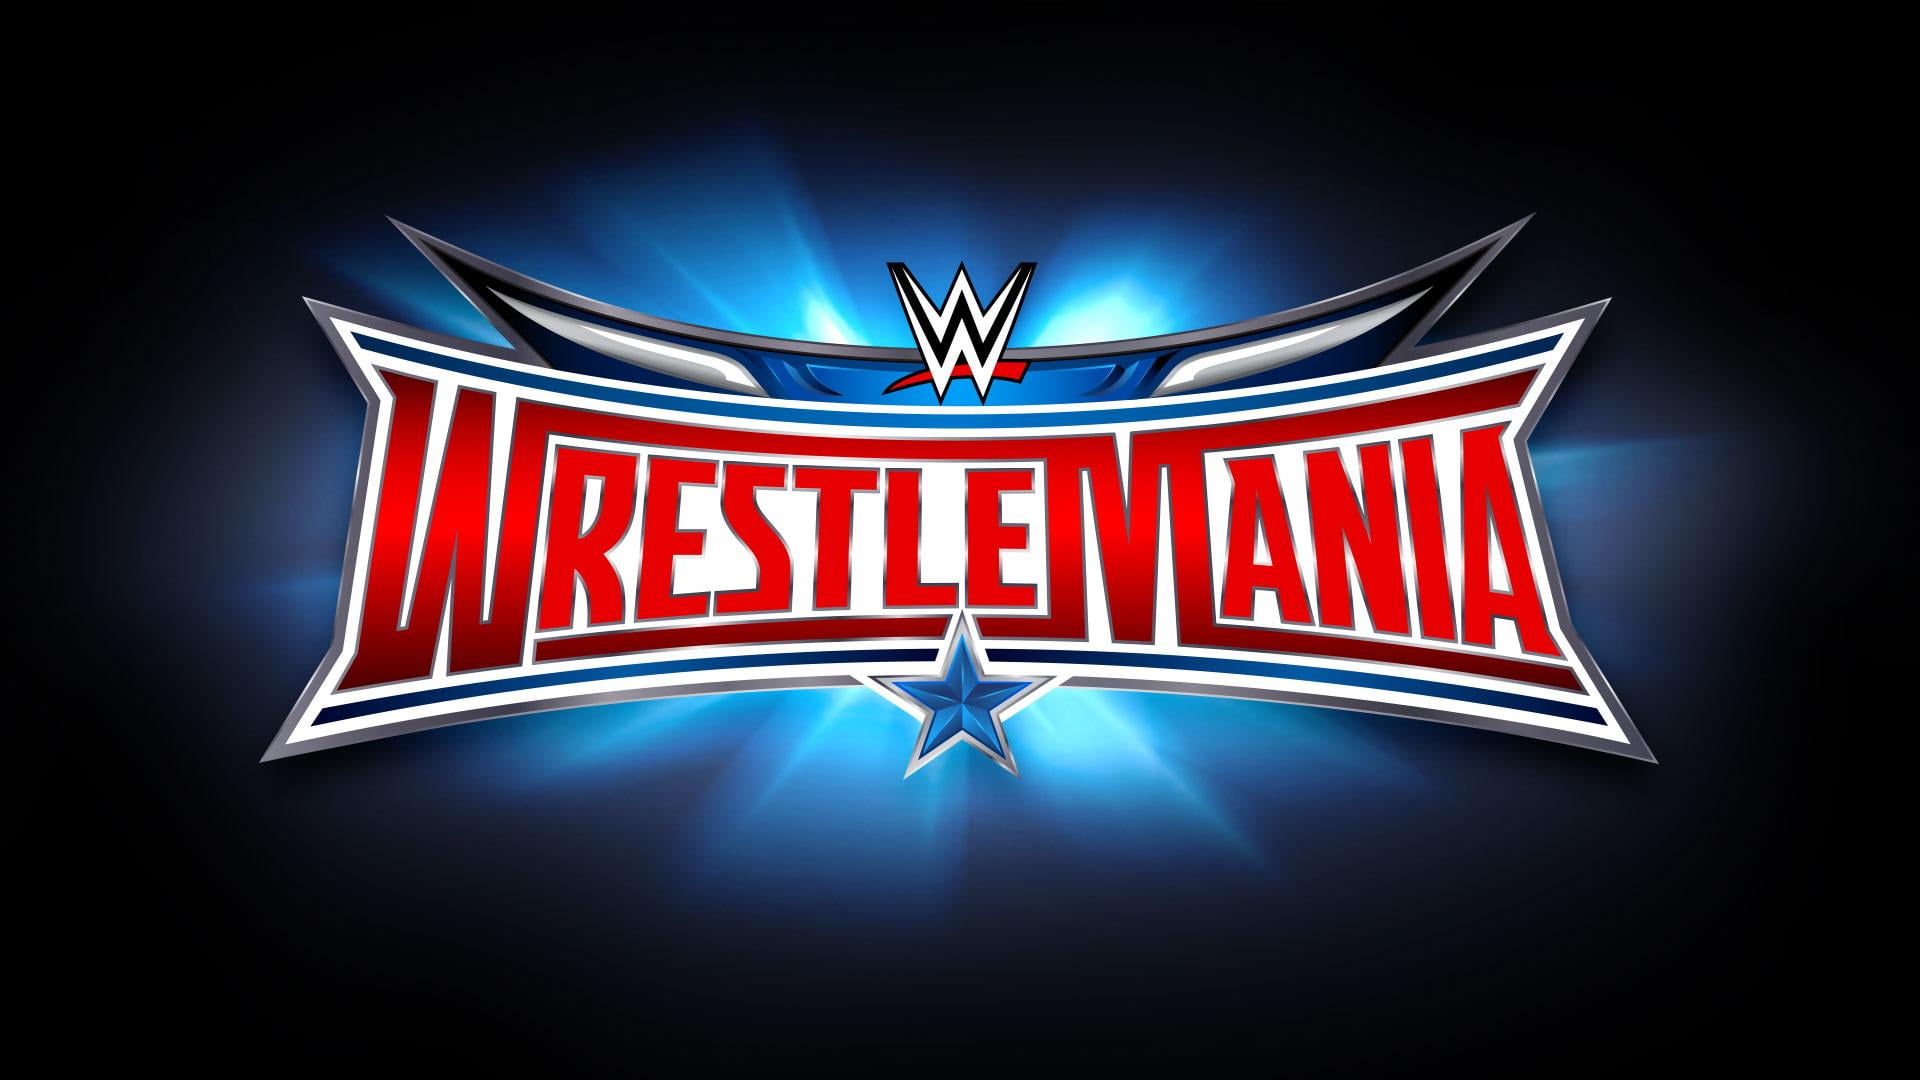 Wrestle Mania logo